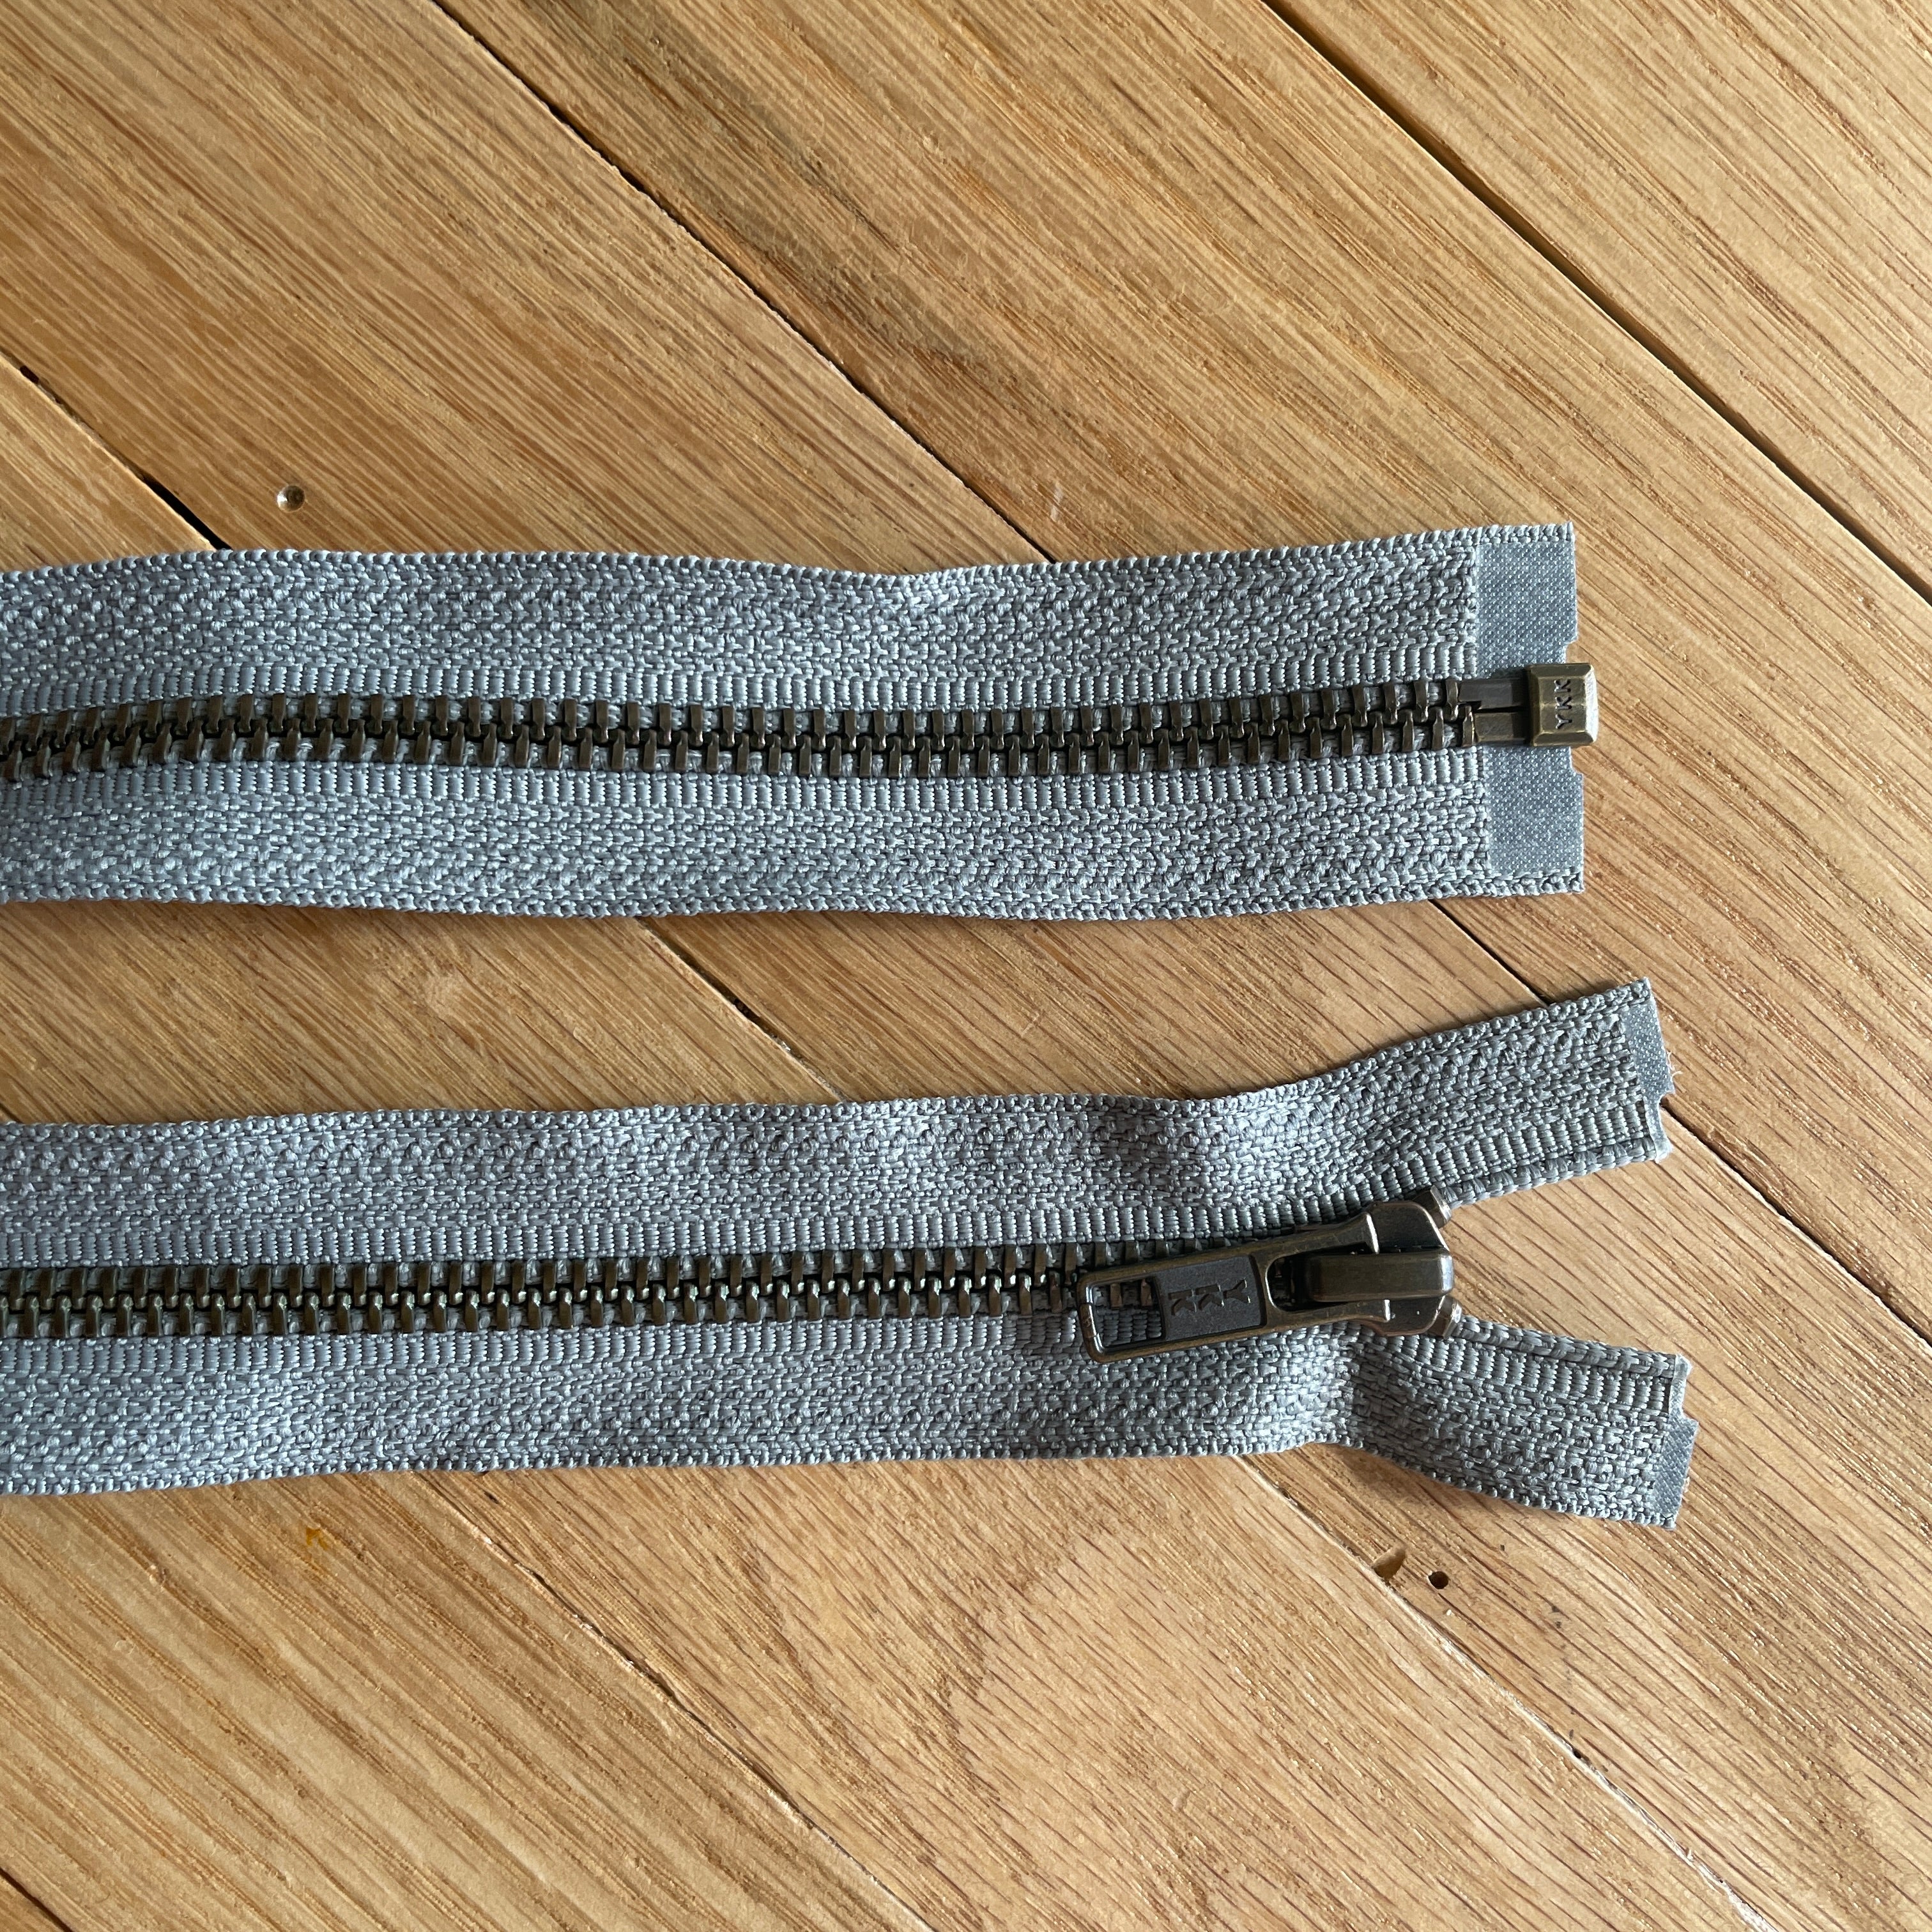 Separating Zippers, Jacket Zippers